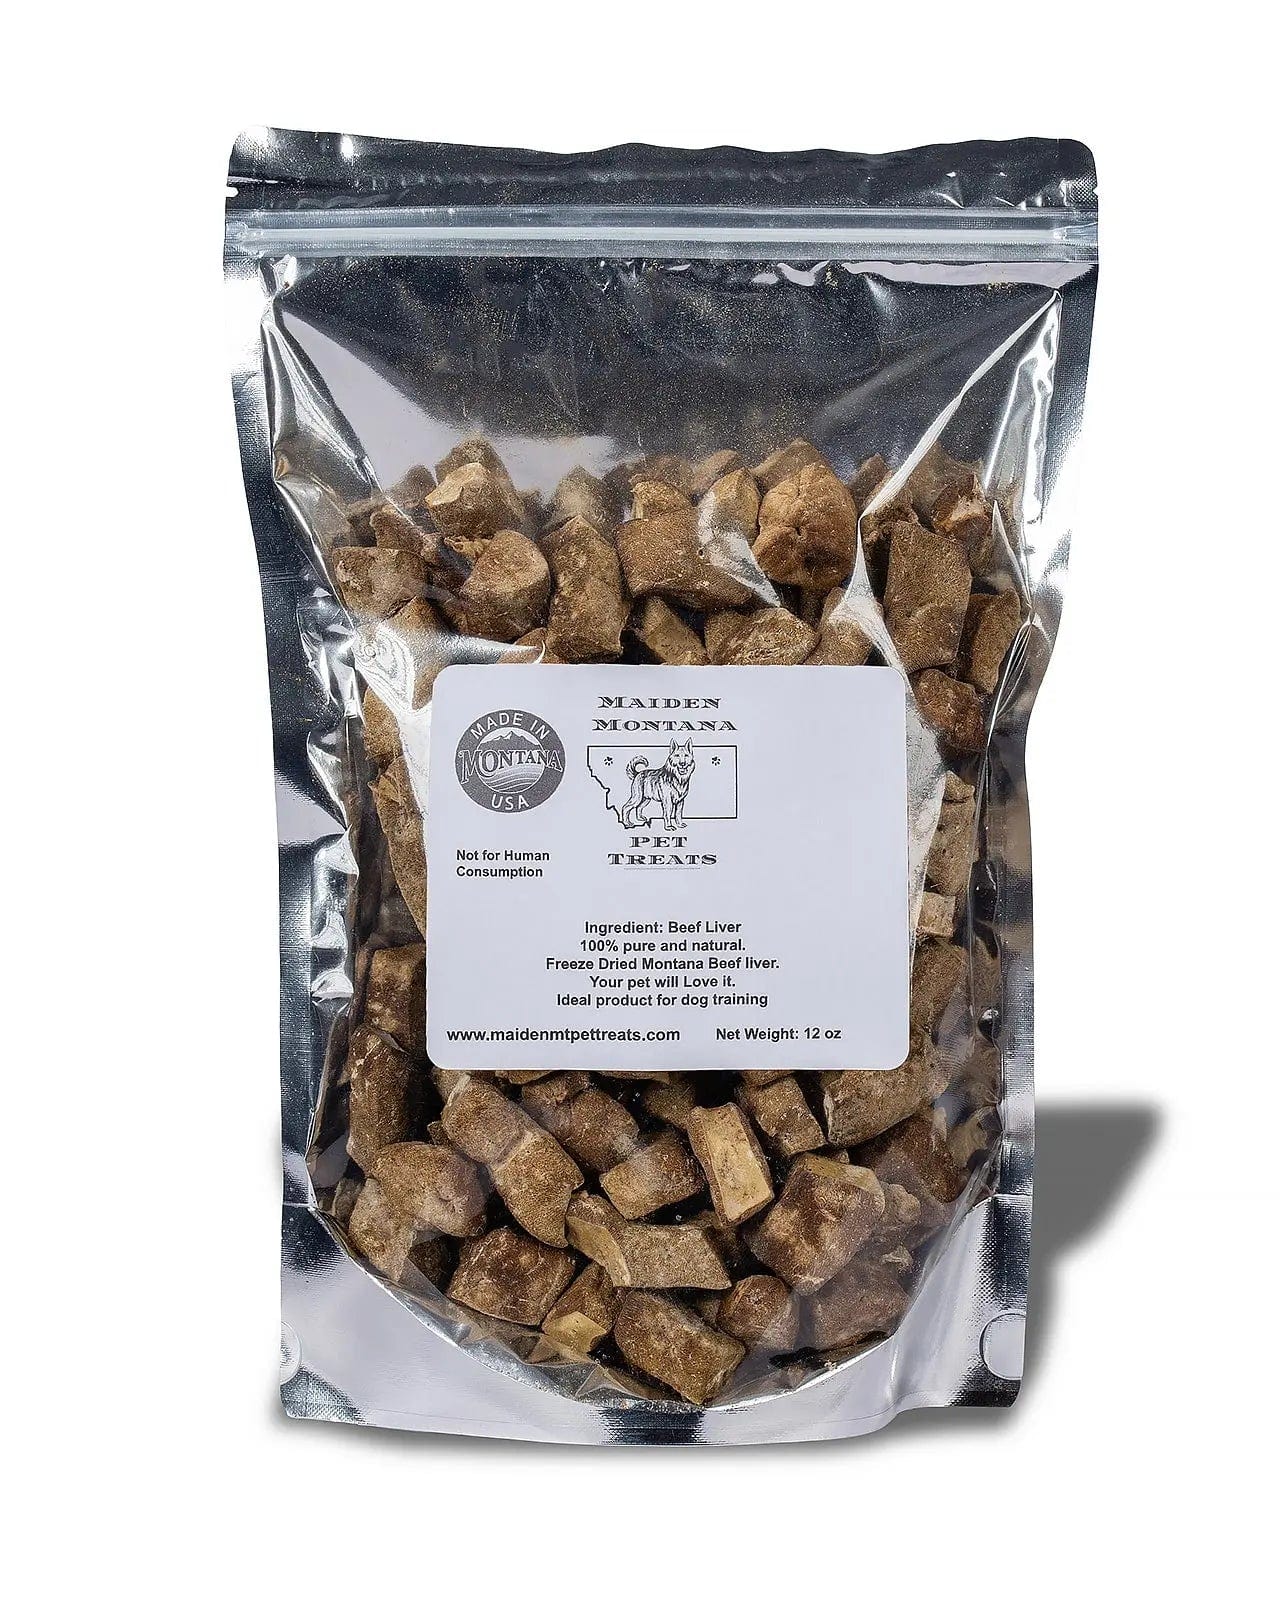 Freeze-Dried Beef Liver Dog Treats - 12oz bag, Maiden Montana Pet Treats - Front Label